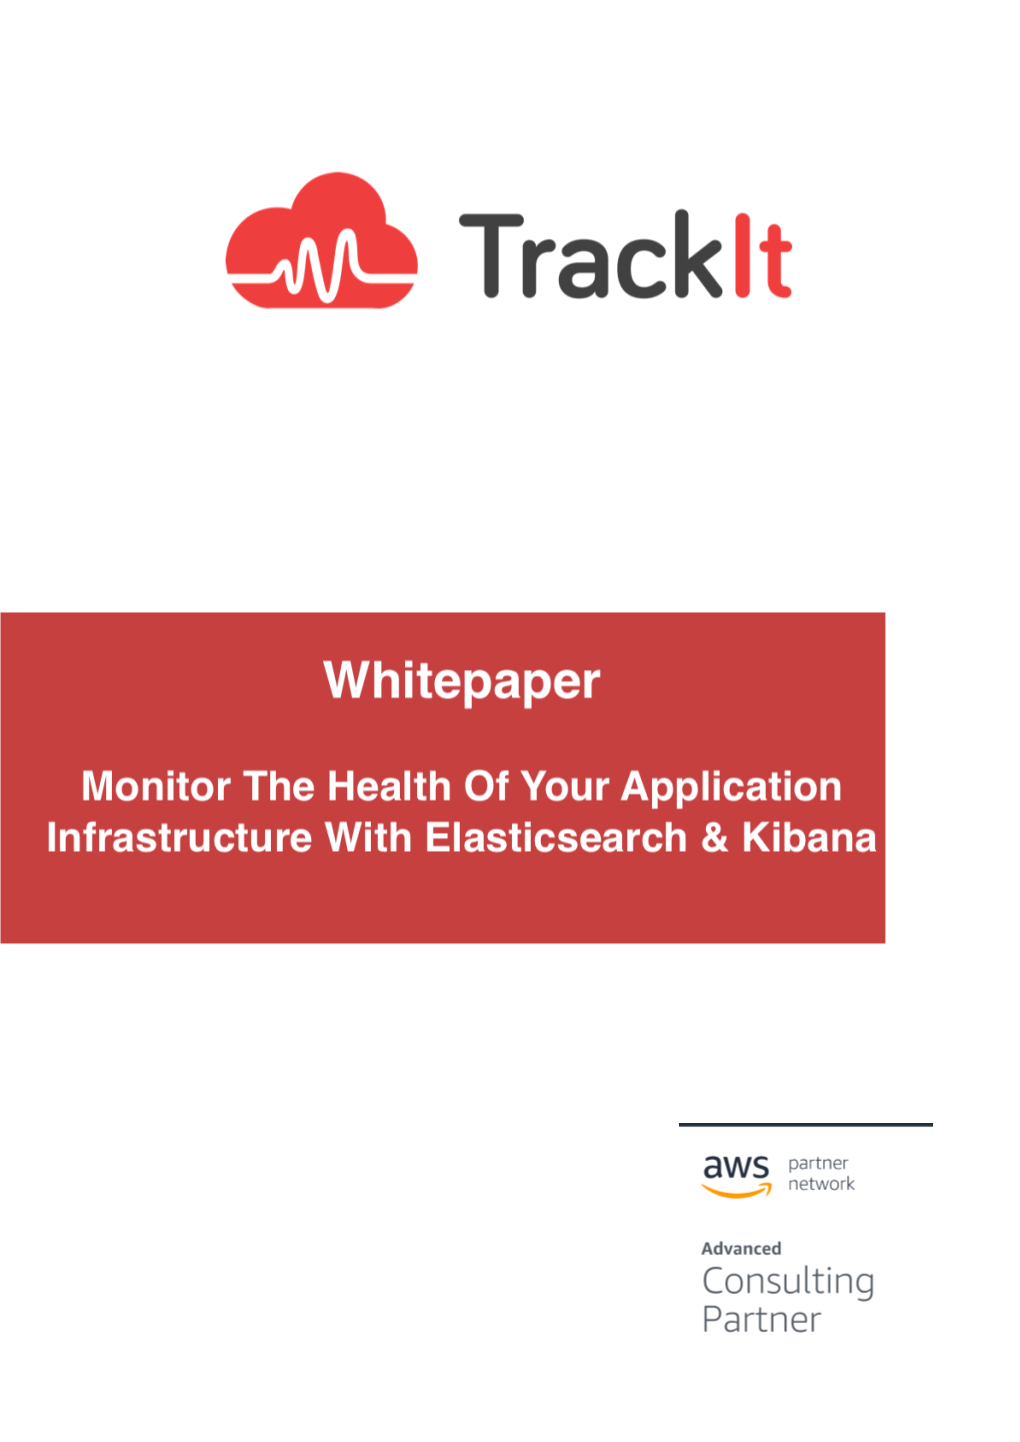 Accessing Elasticsearch & Kibana